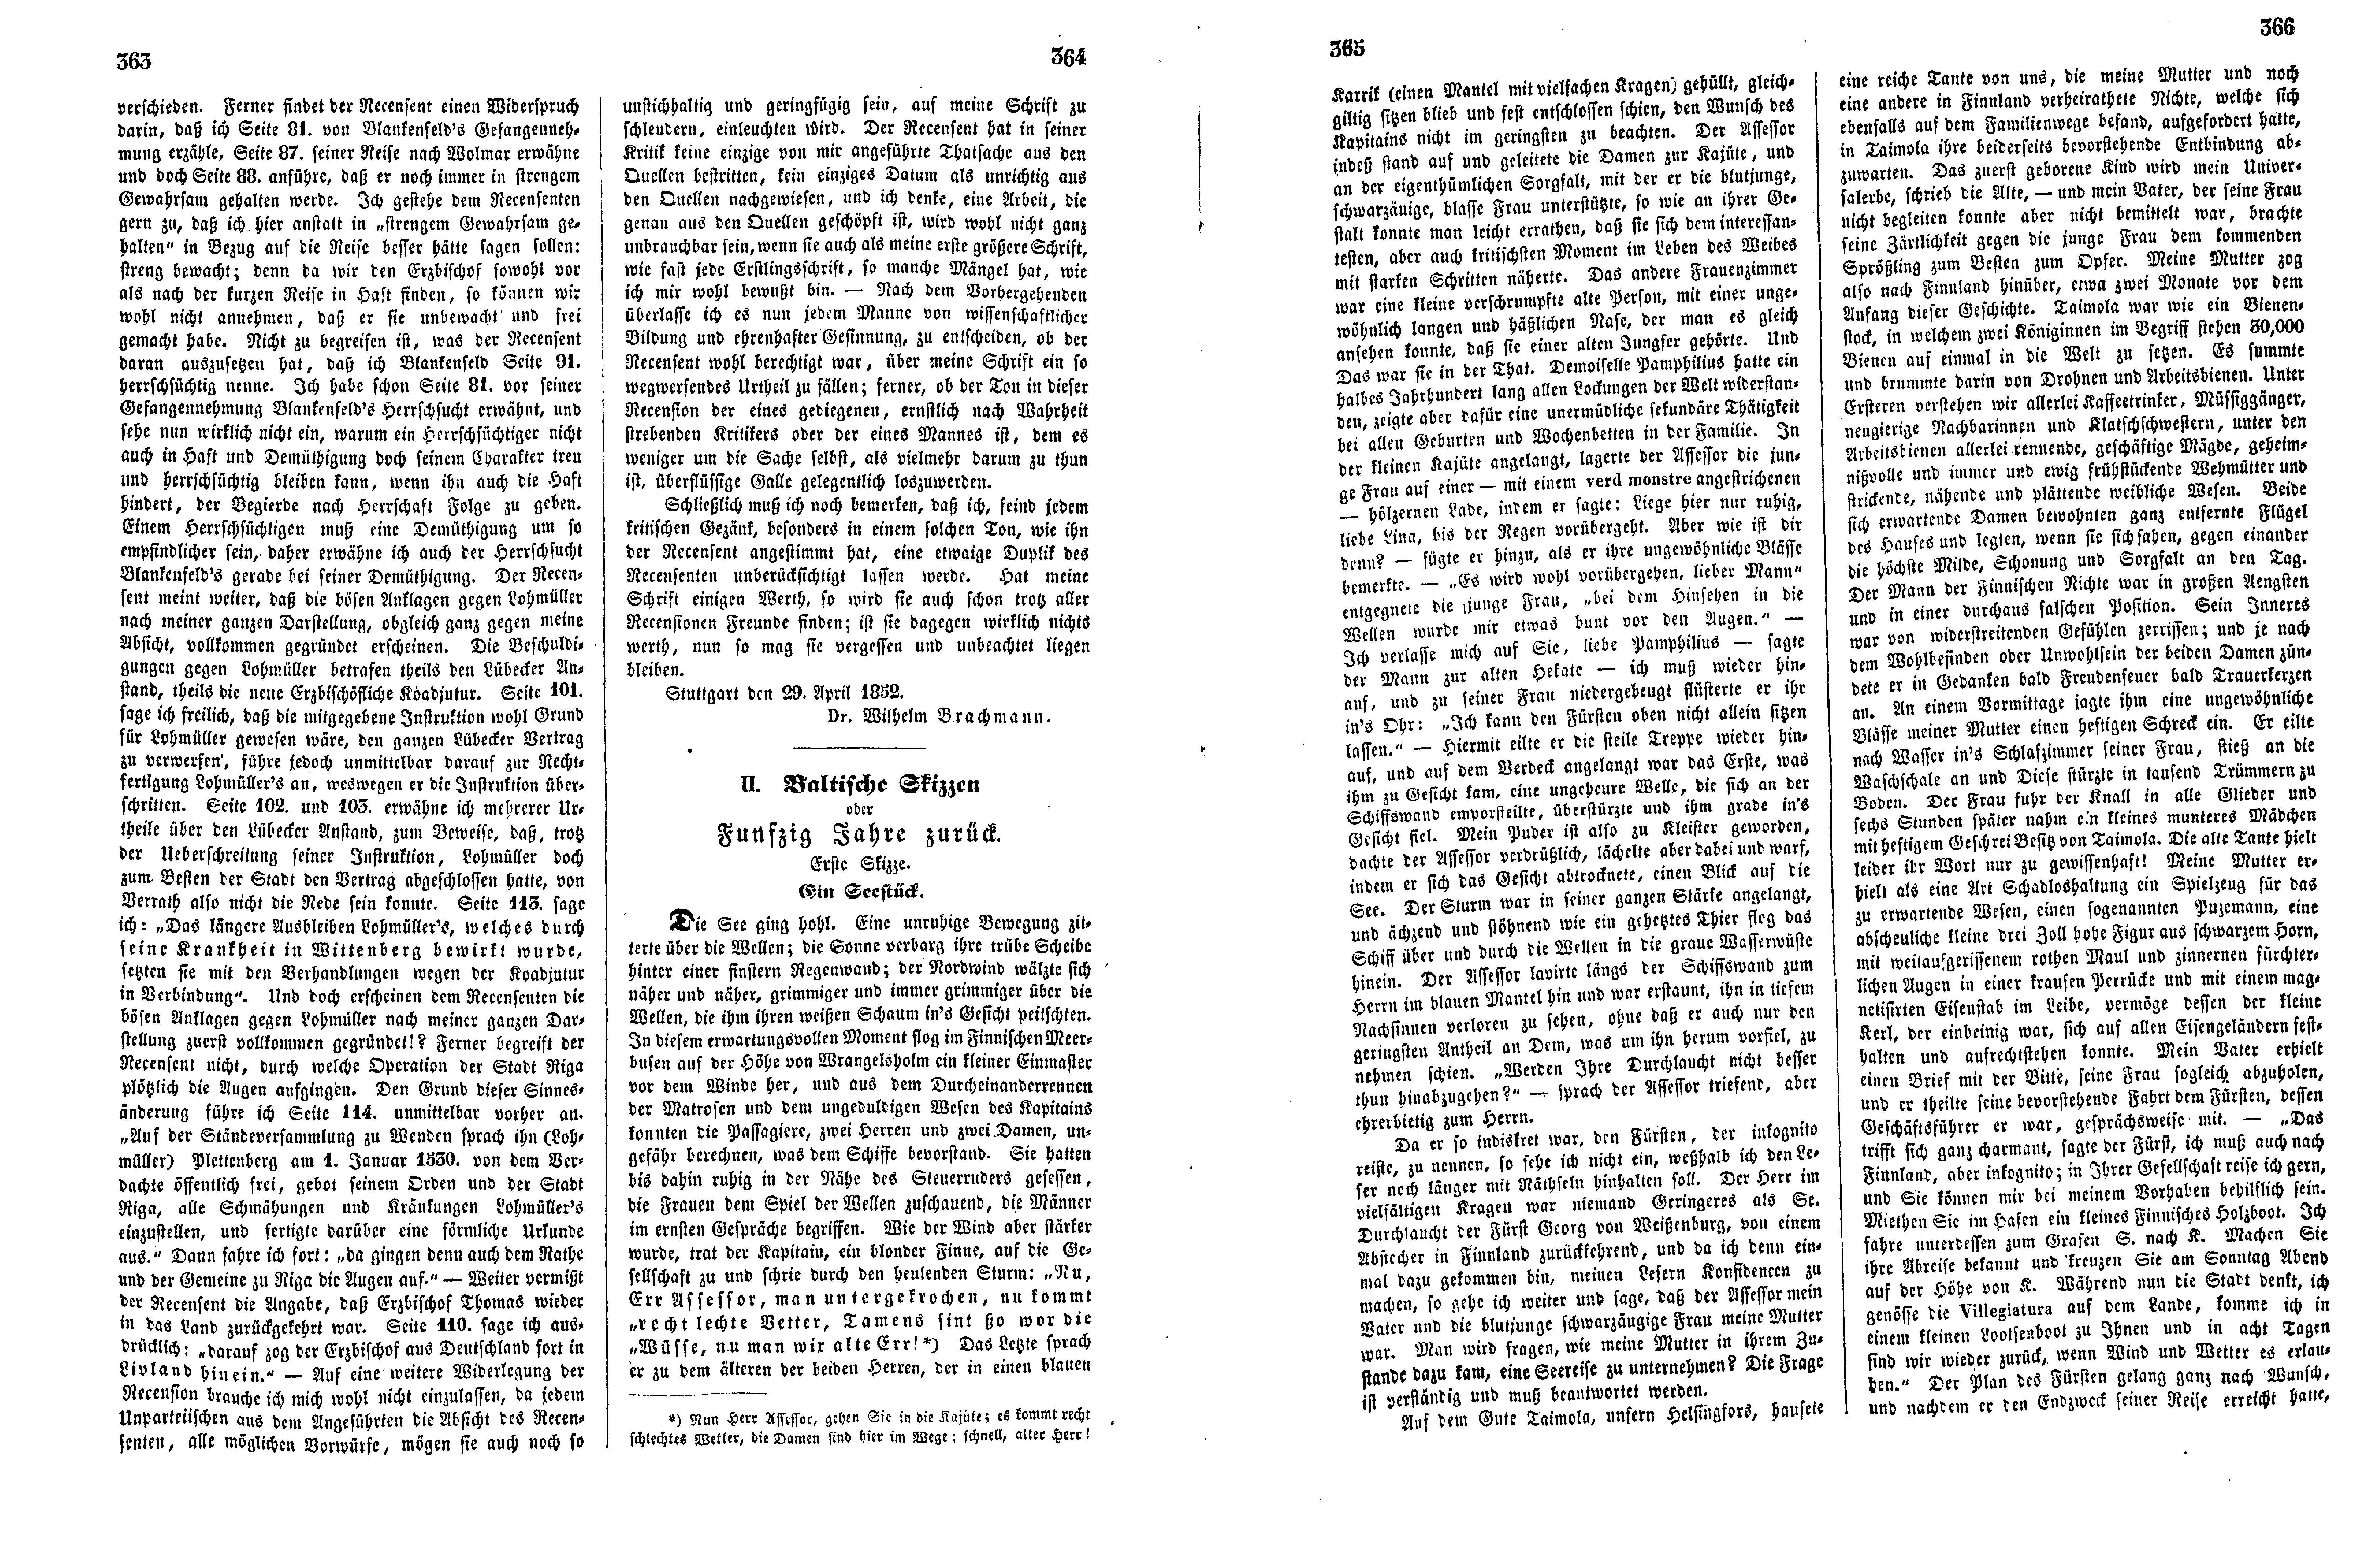 Das Inland [17] (1852) | 95. (363-366) Main body of text